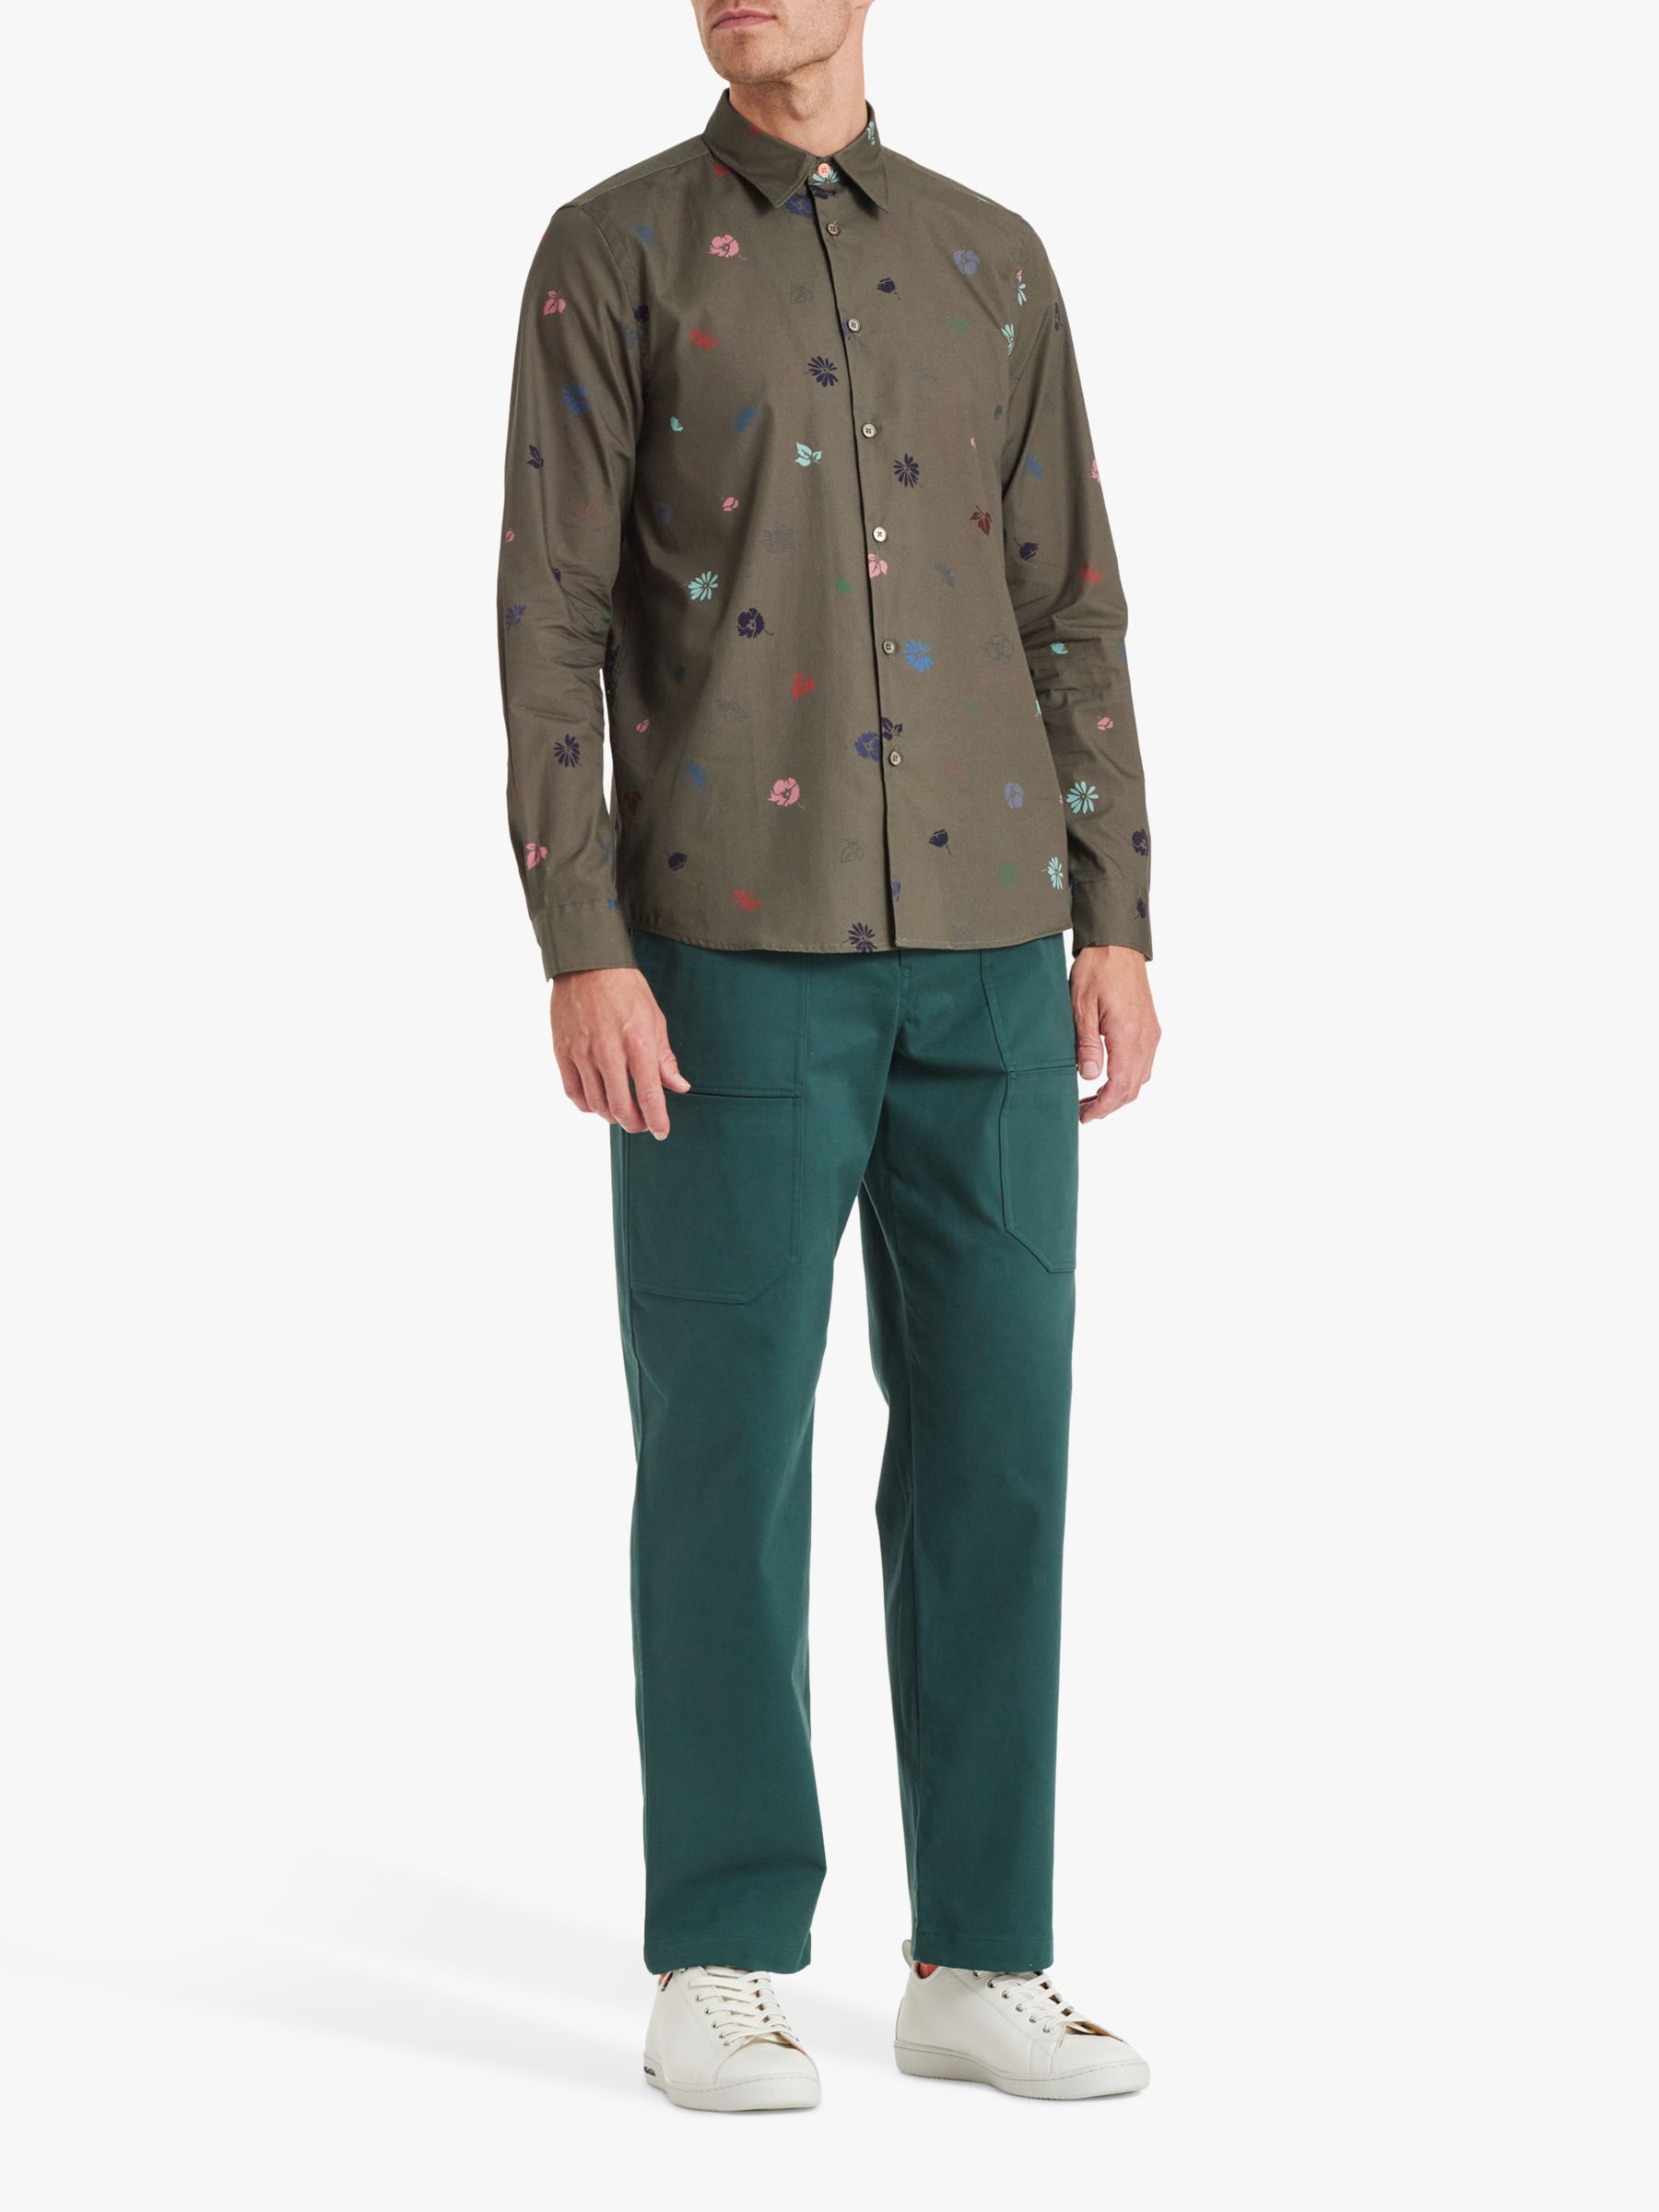 Paul Smith Regular Fit Floral Print Shirt, Khaki/Multi, M